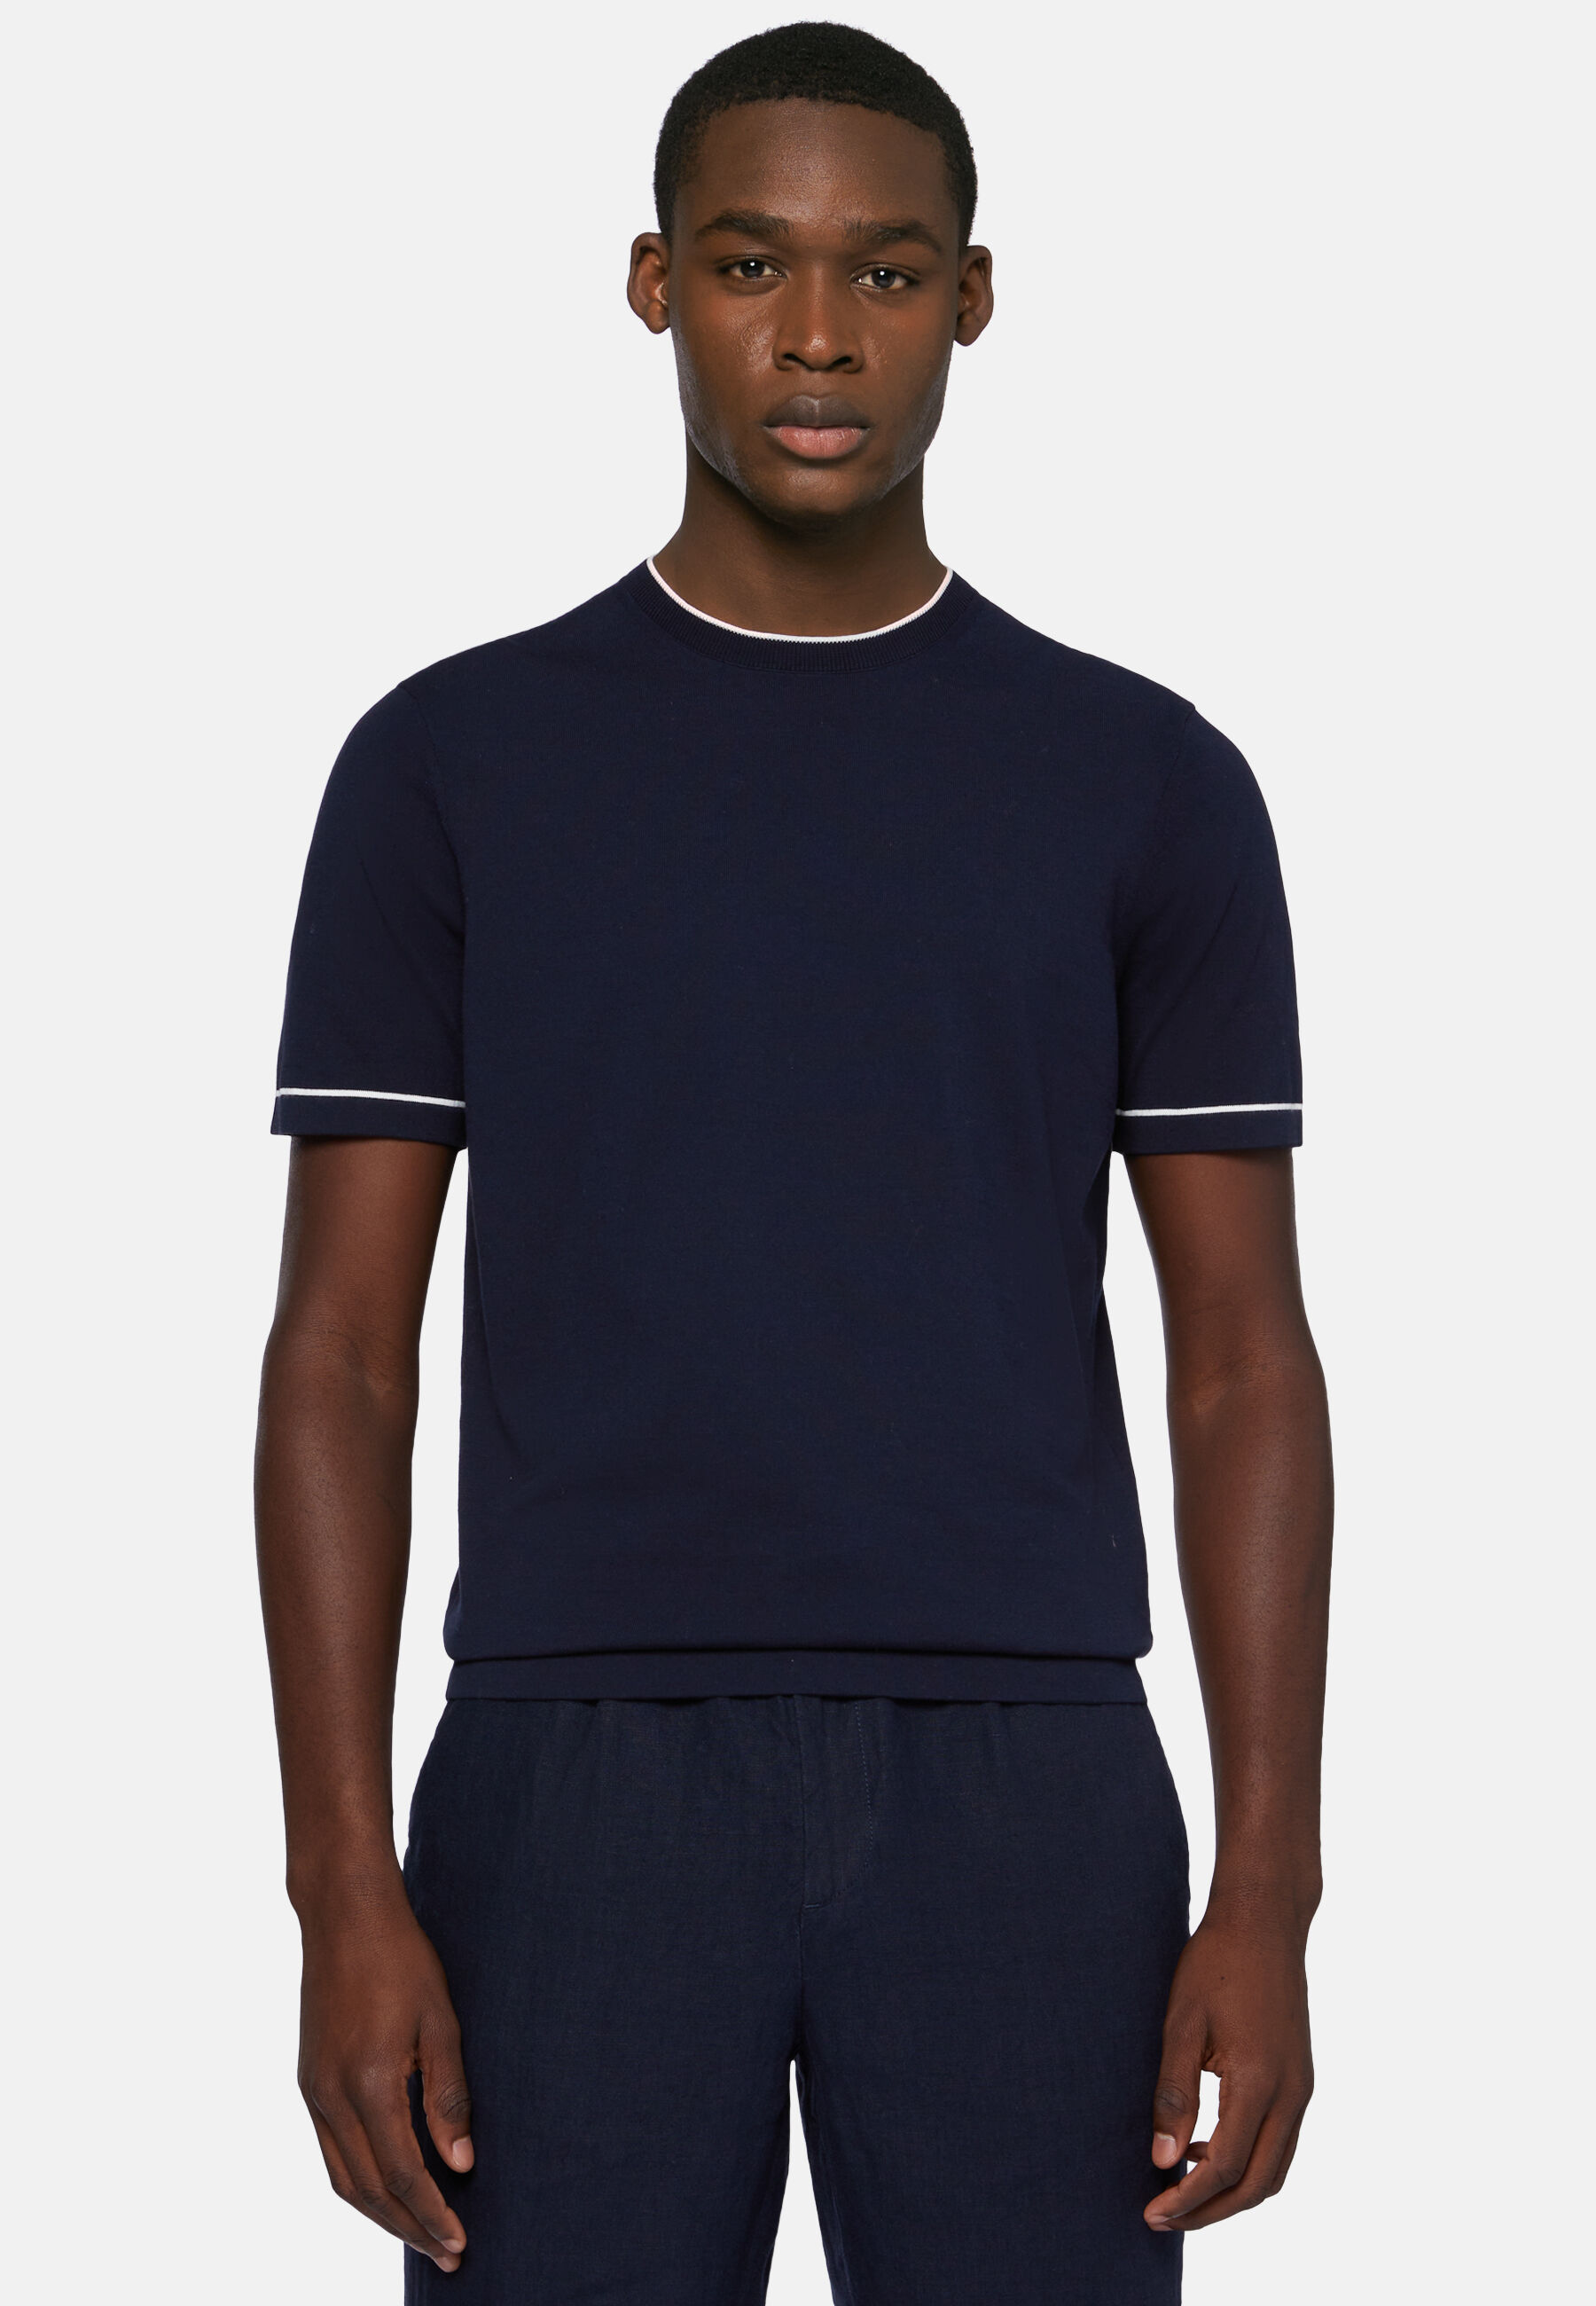 Navy Cotton Crepe Knit T-shirt, Navy blue, hi-res